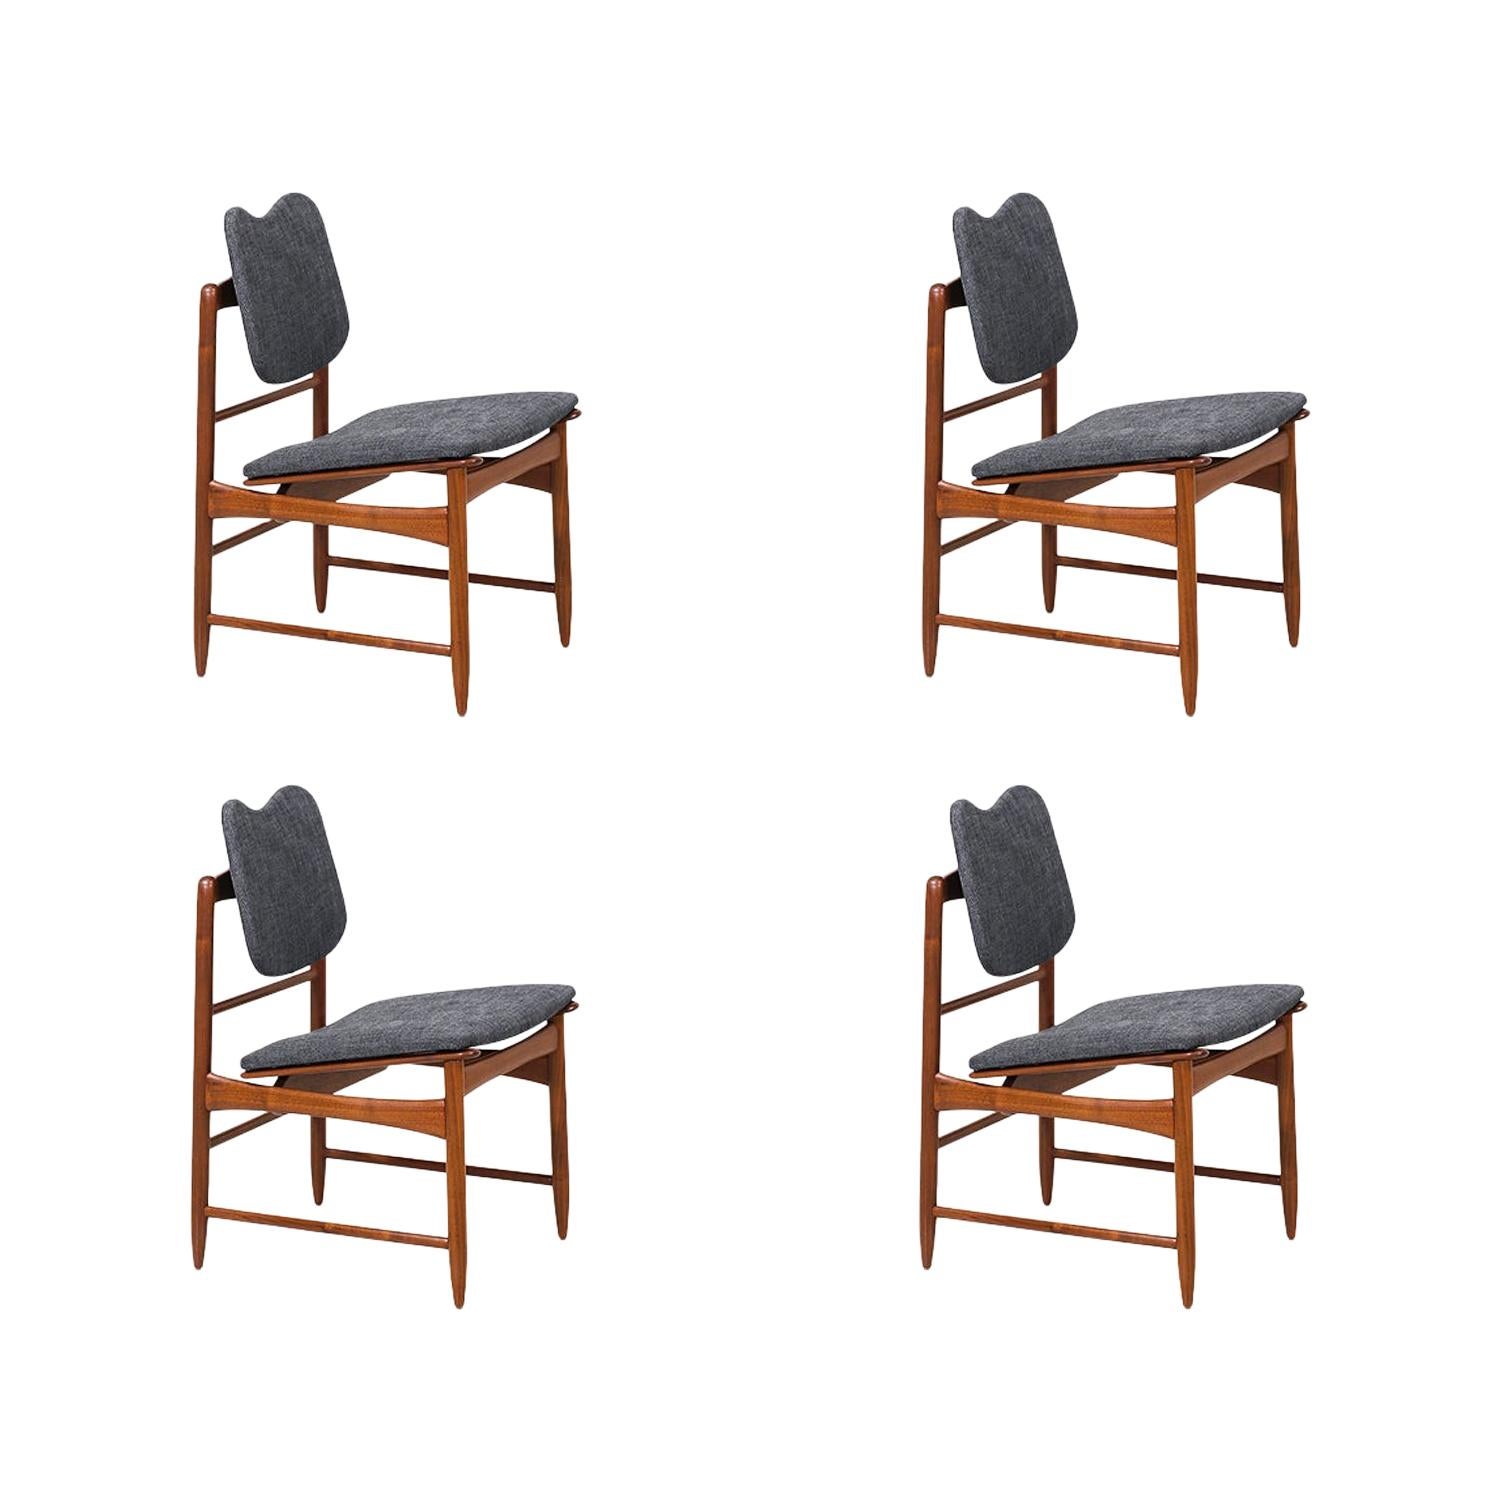 Greta M. Grossman Sculpted Dining Chairs for Glenn of California